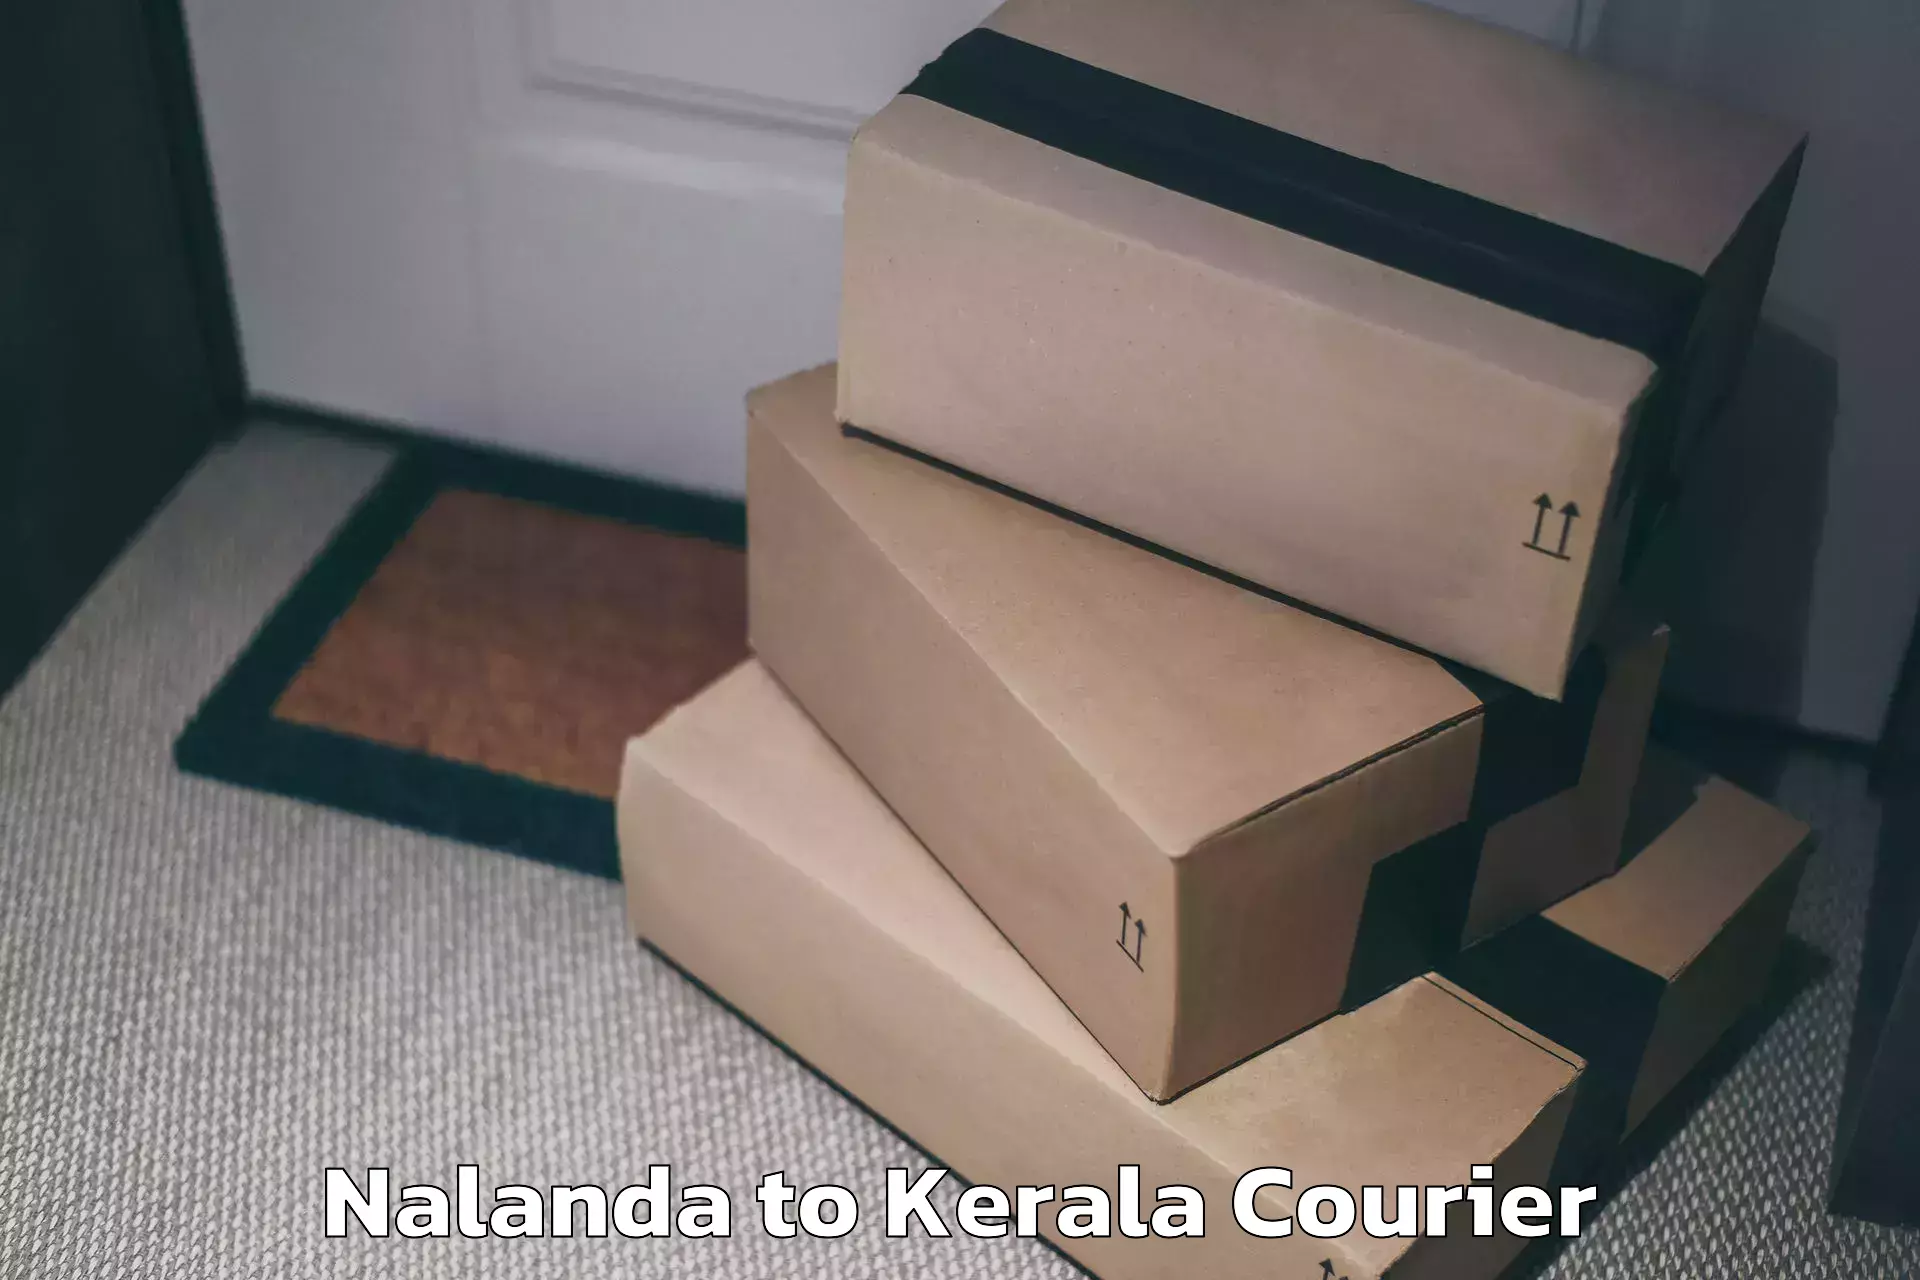 Same day luggage service Nalanda to Kerala